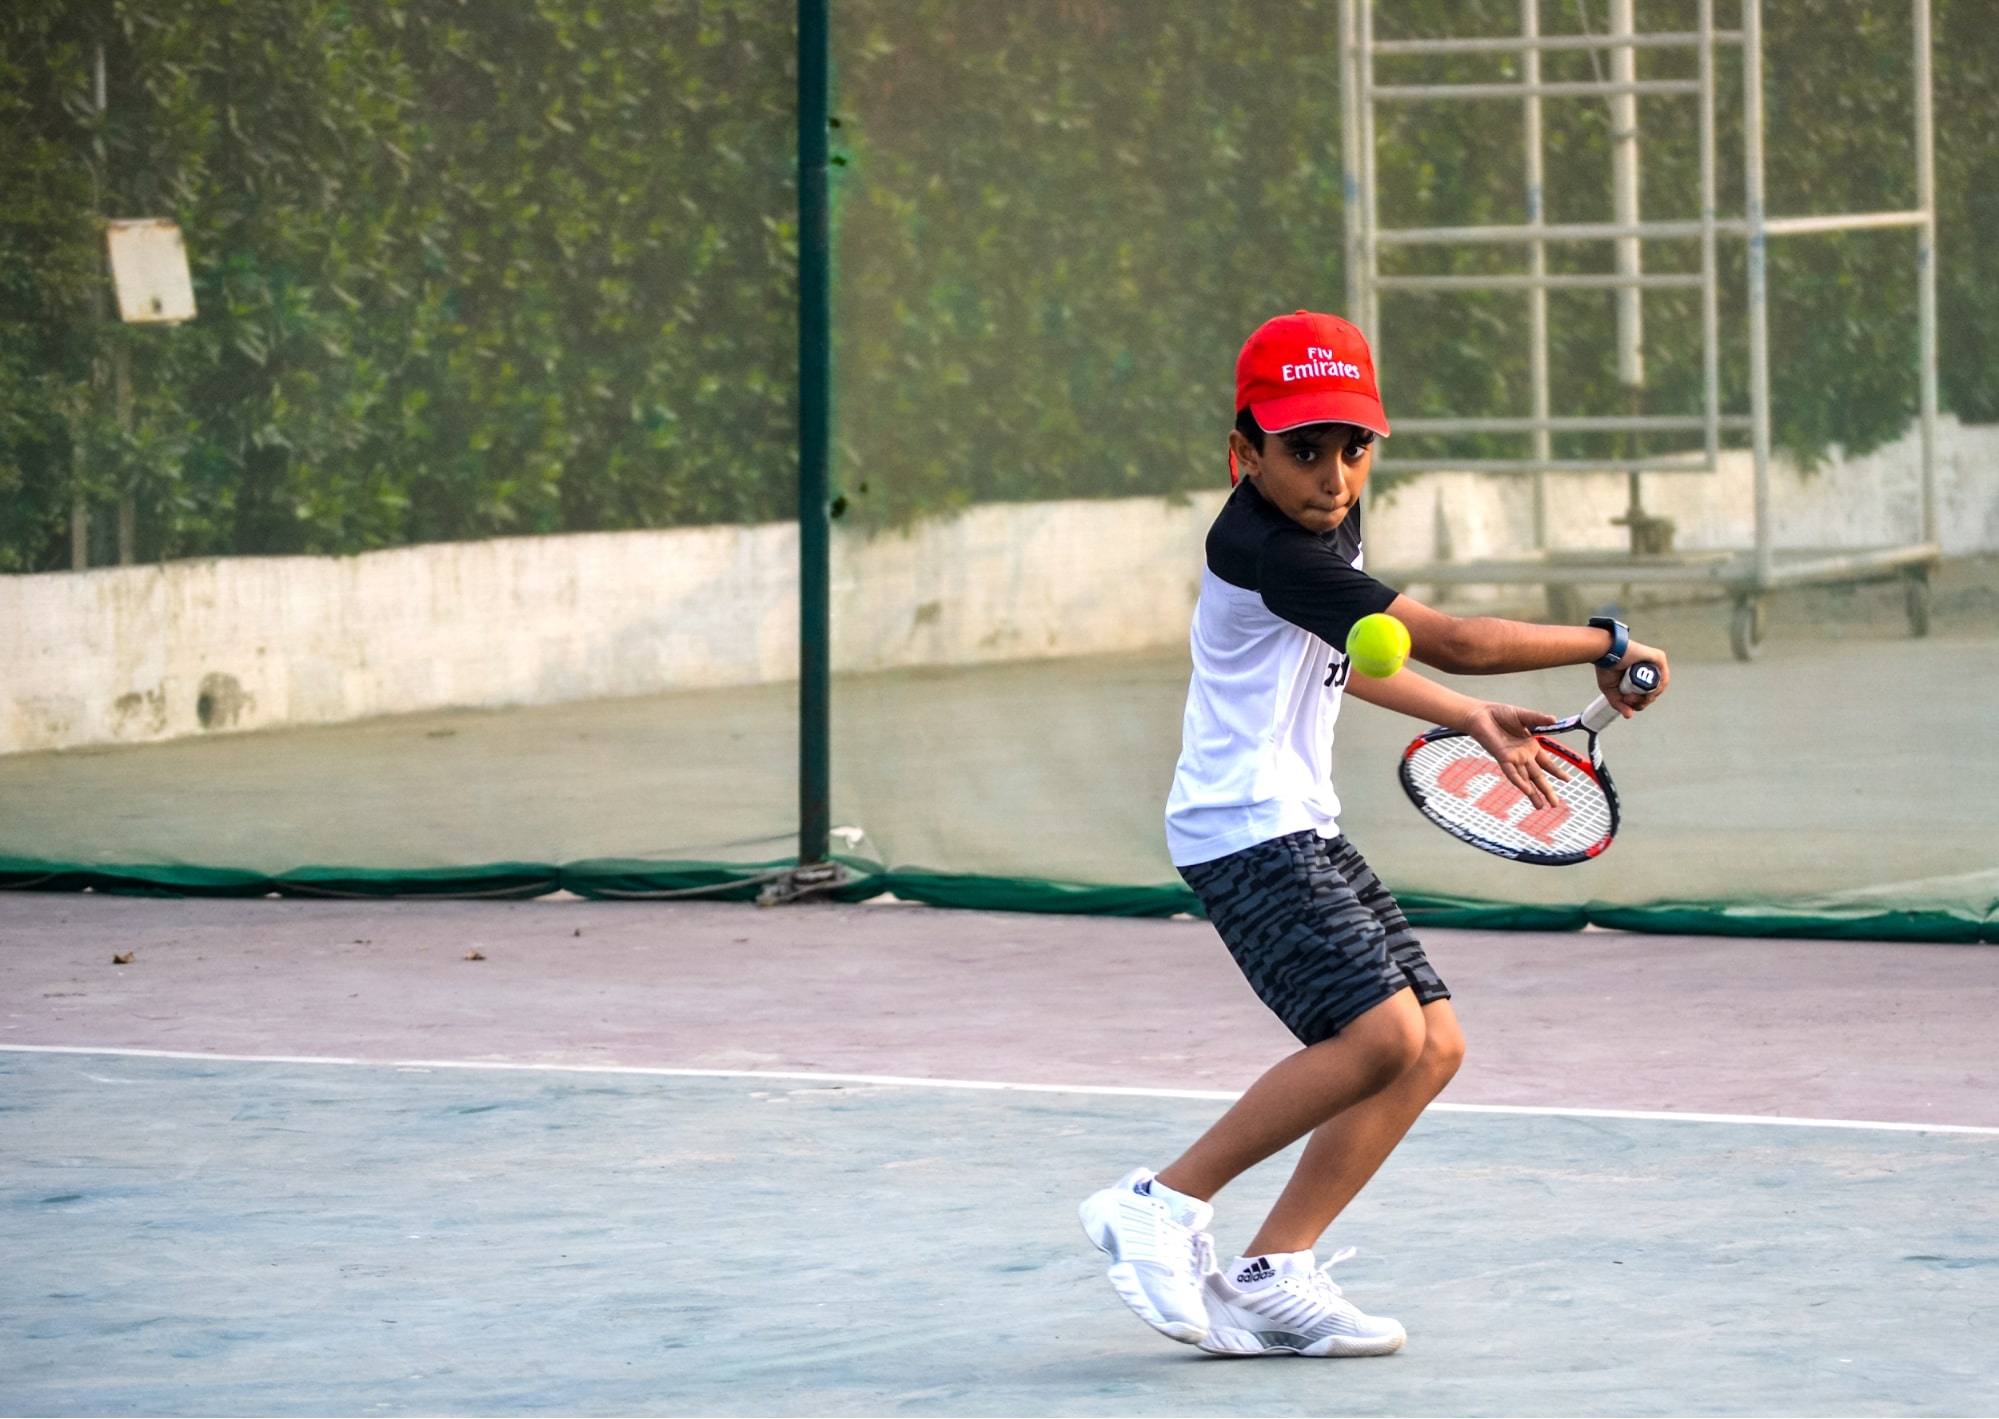 Kid in red cap playing tennis at Shamsi Tennis Academy | Ticketwala.pk